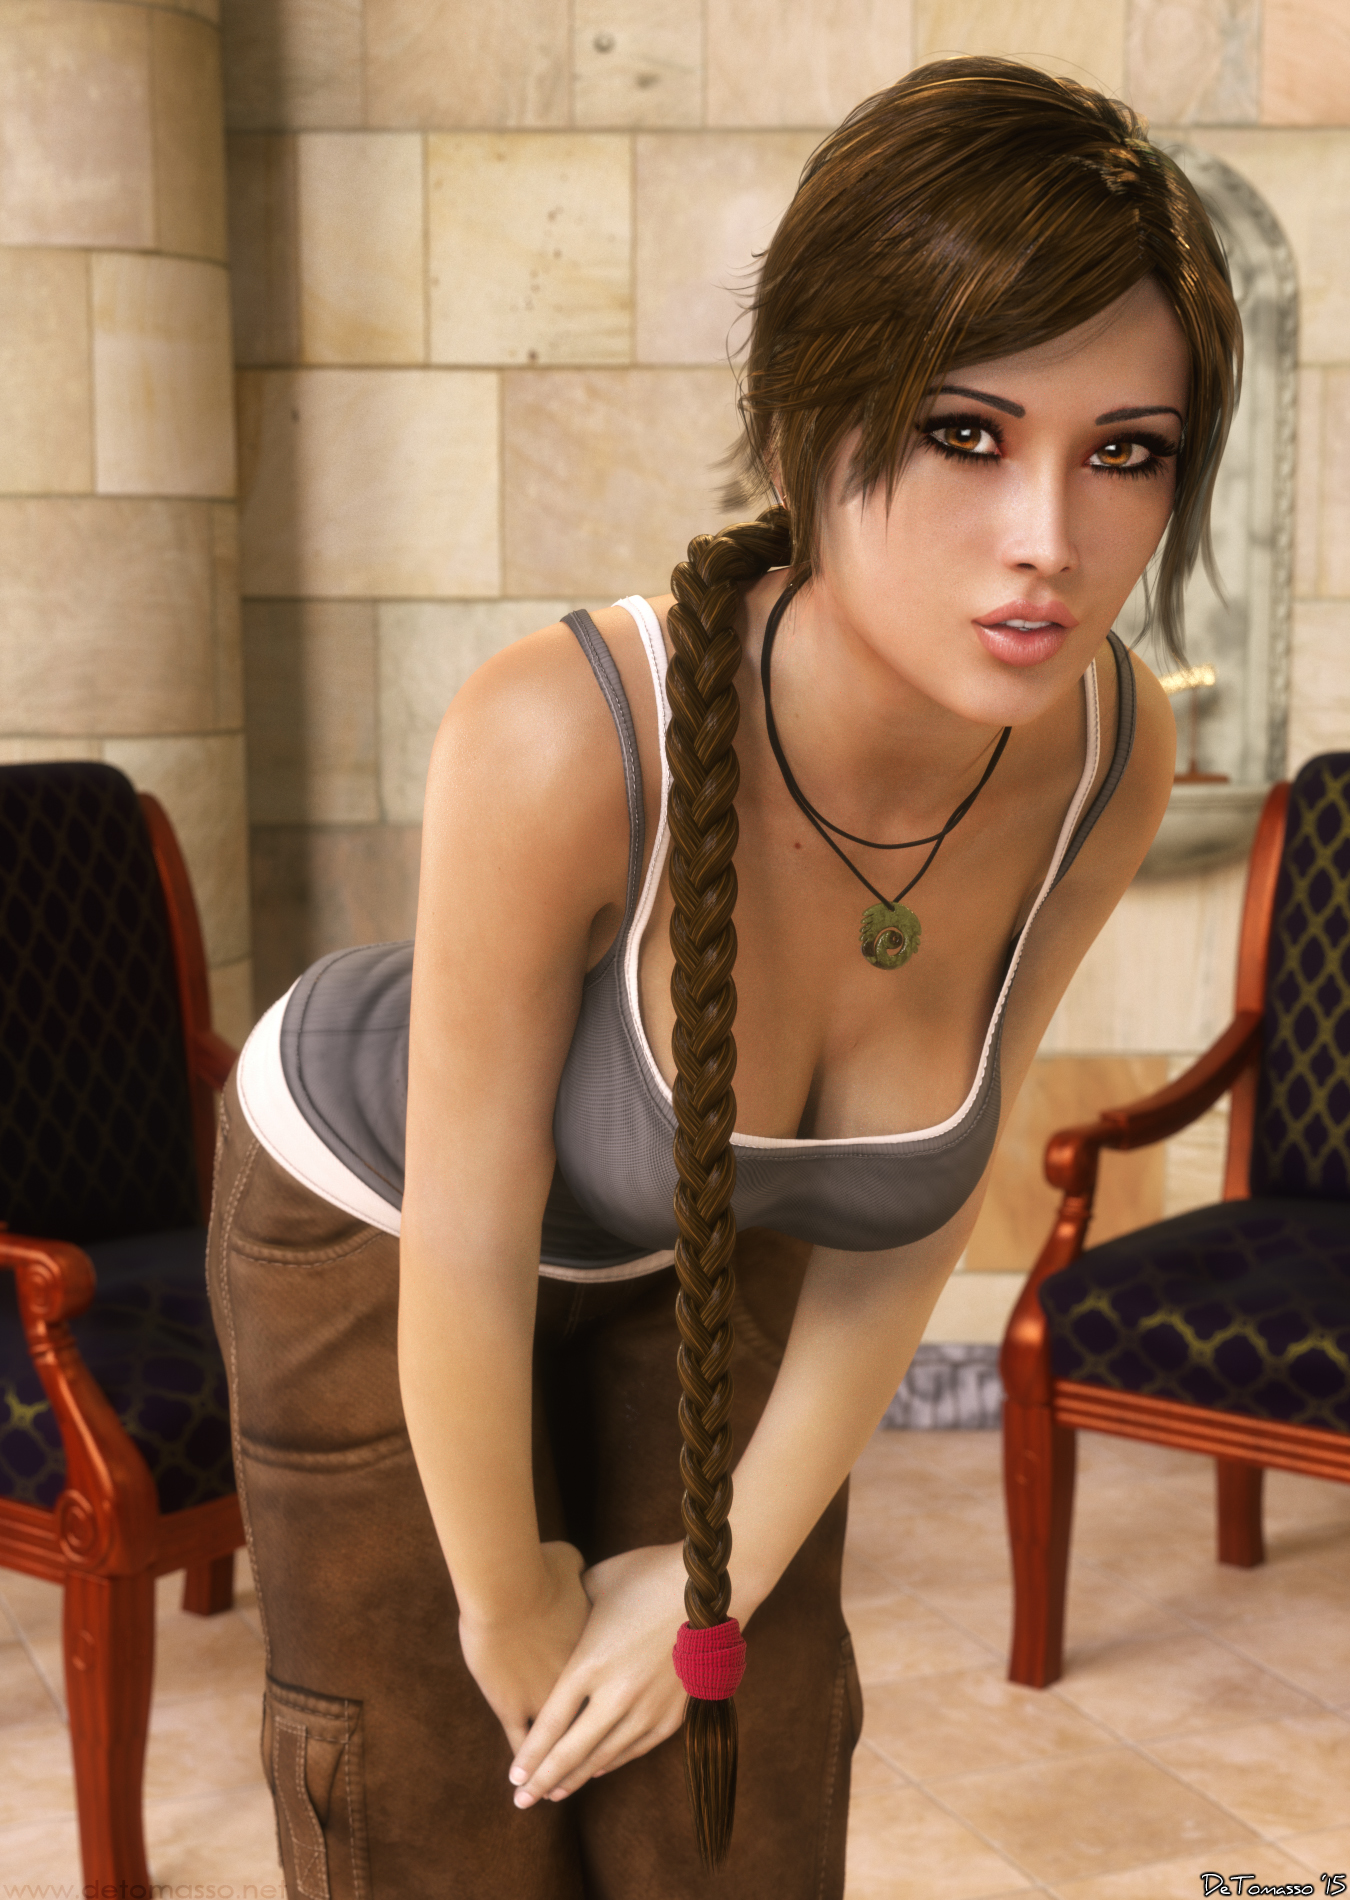 Commission - Lara, clothed version.